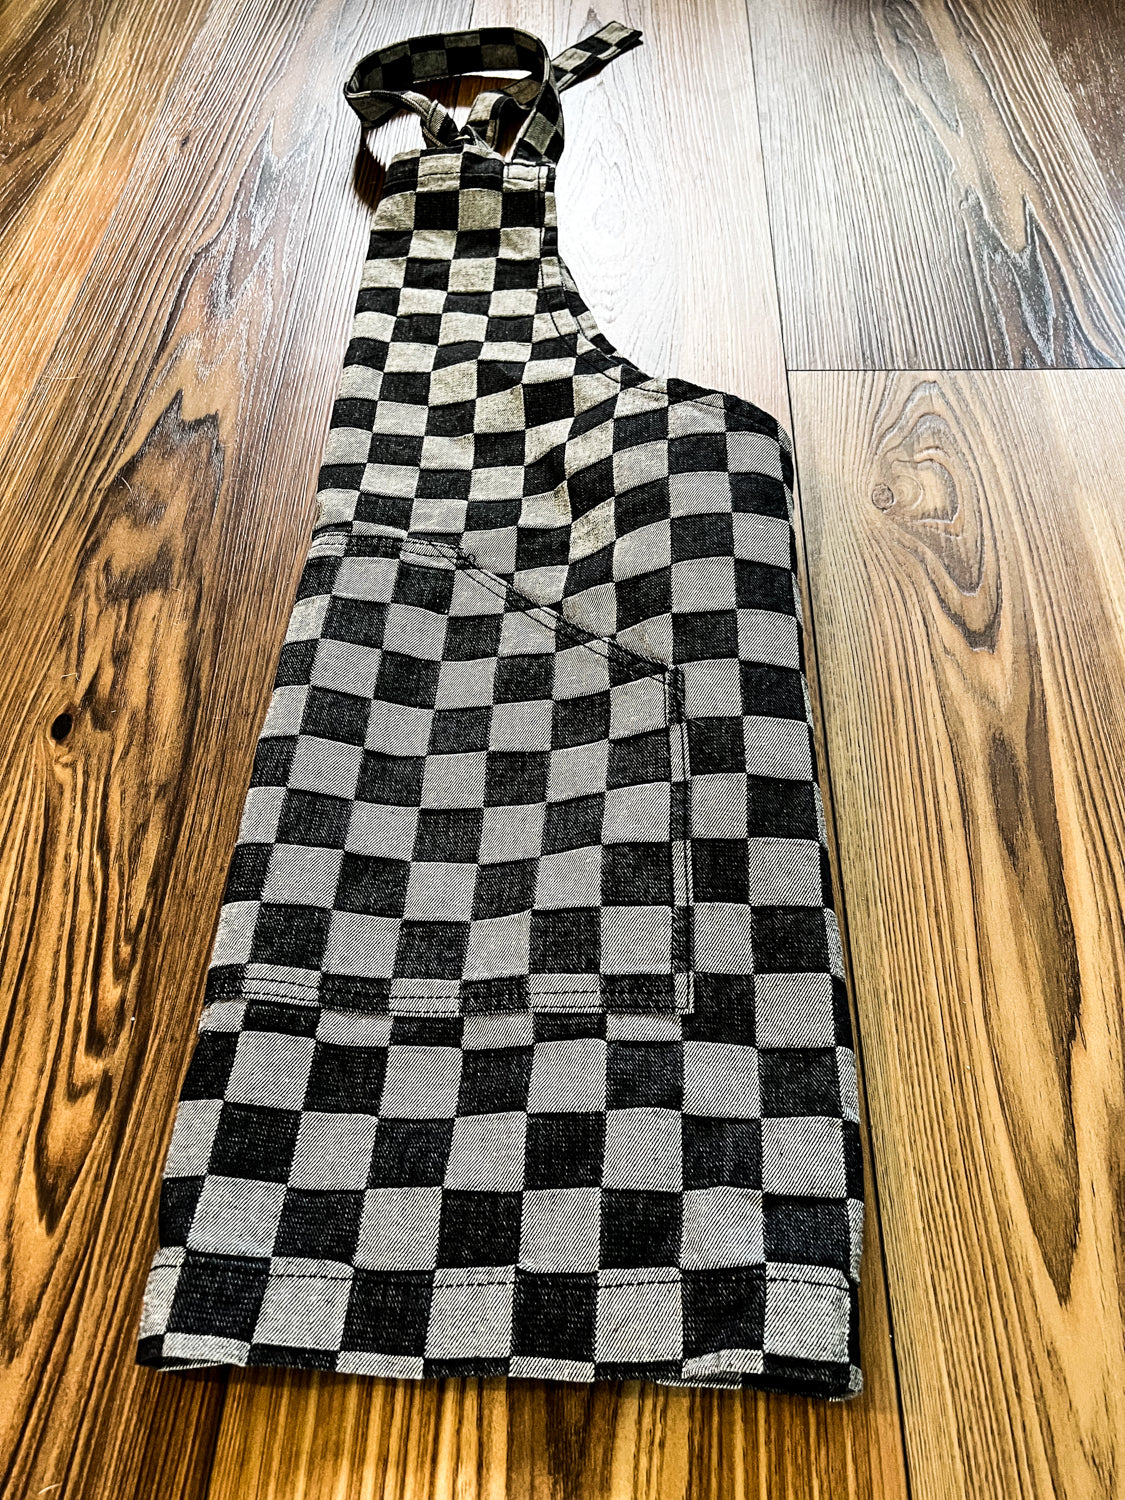 Checkered Apron